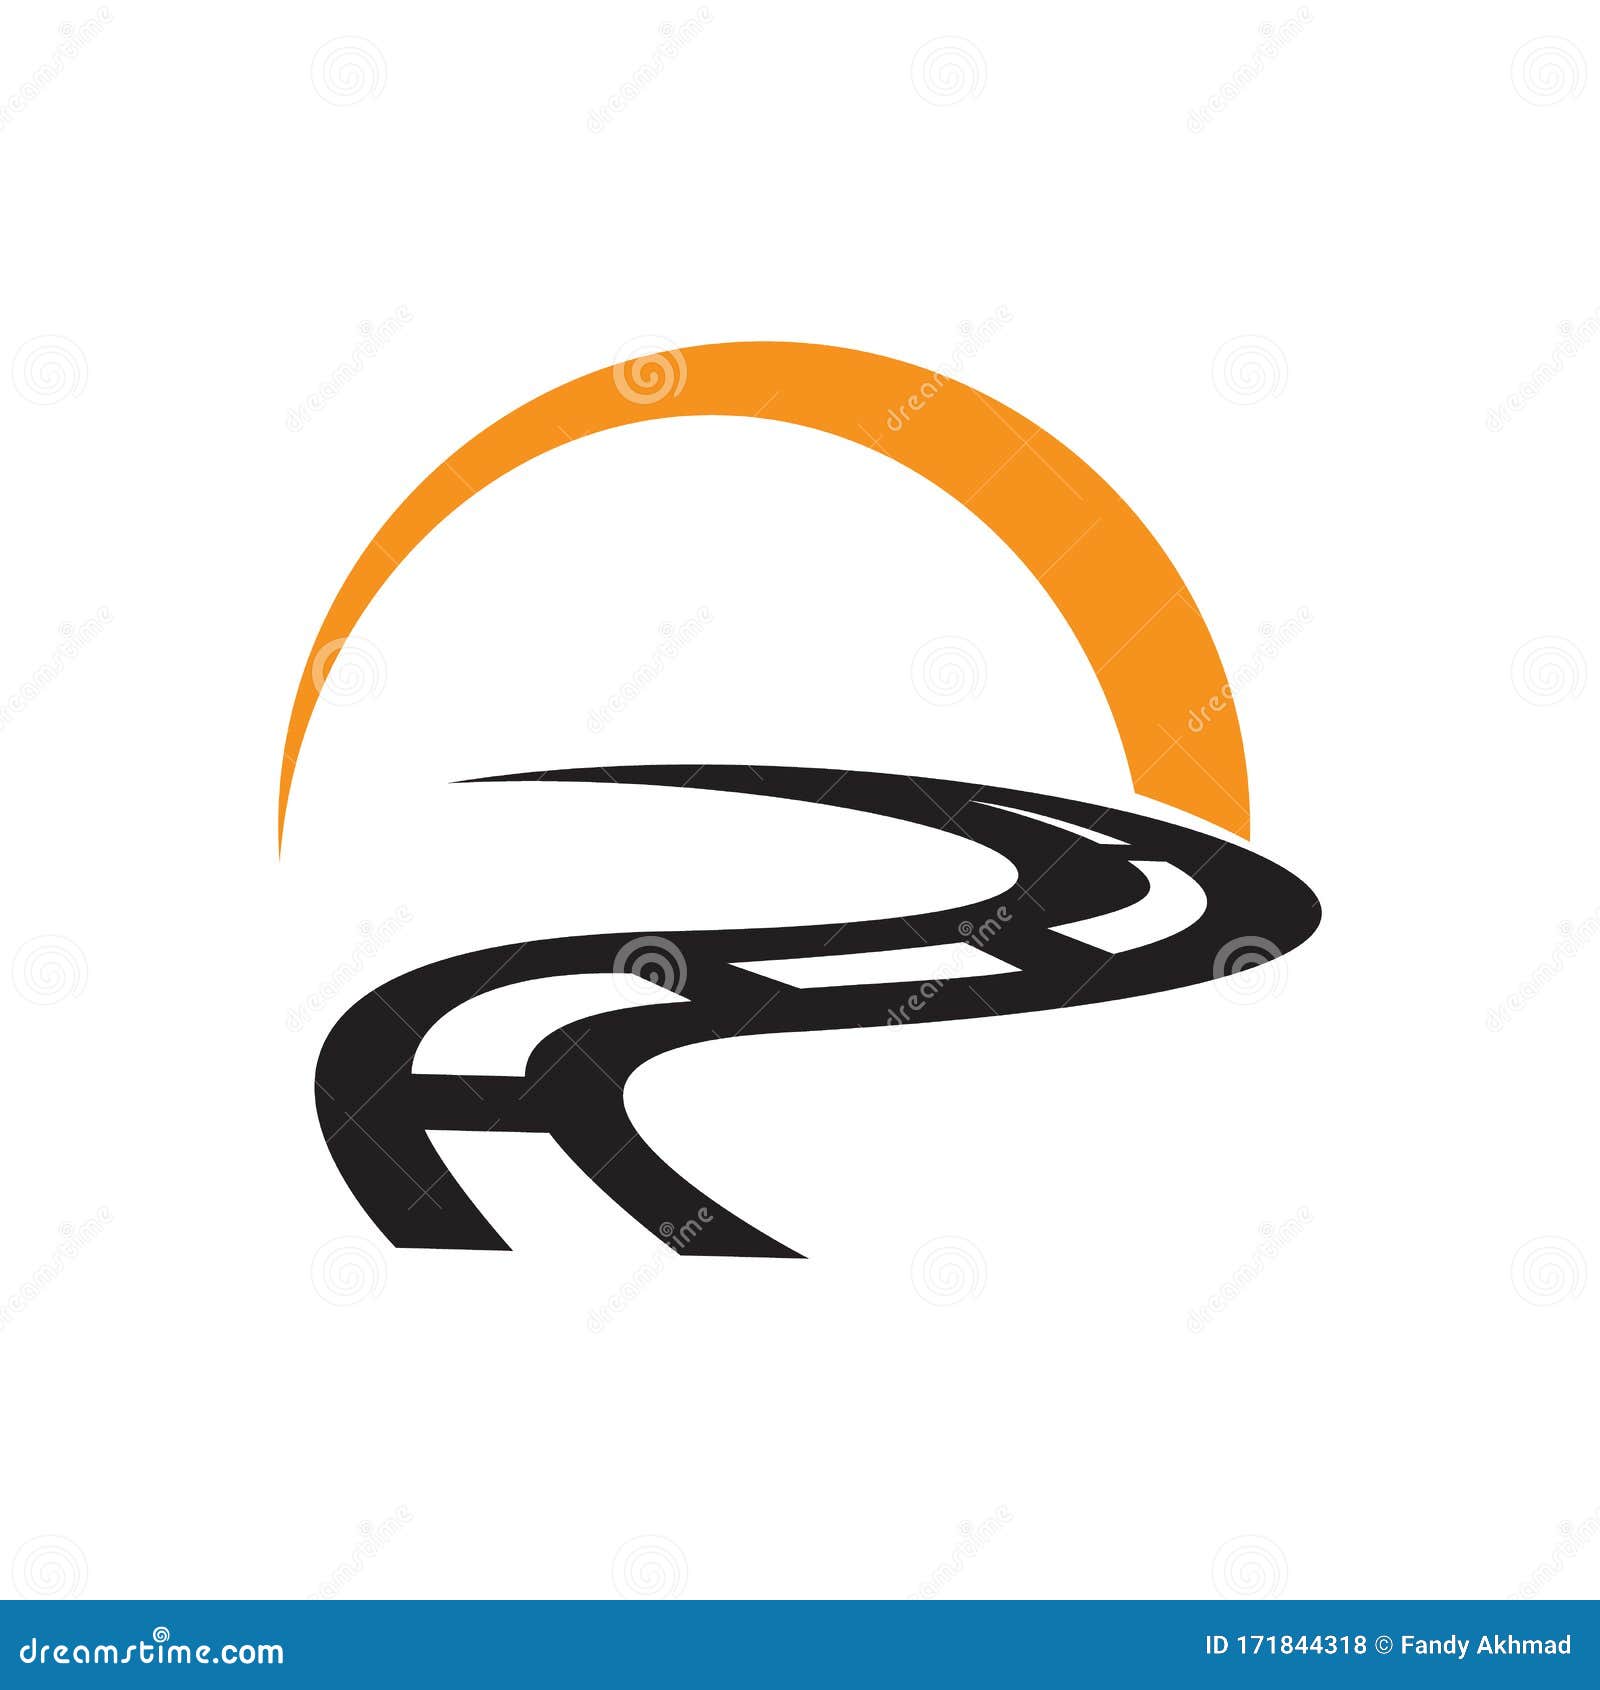 road travel logo